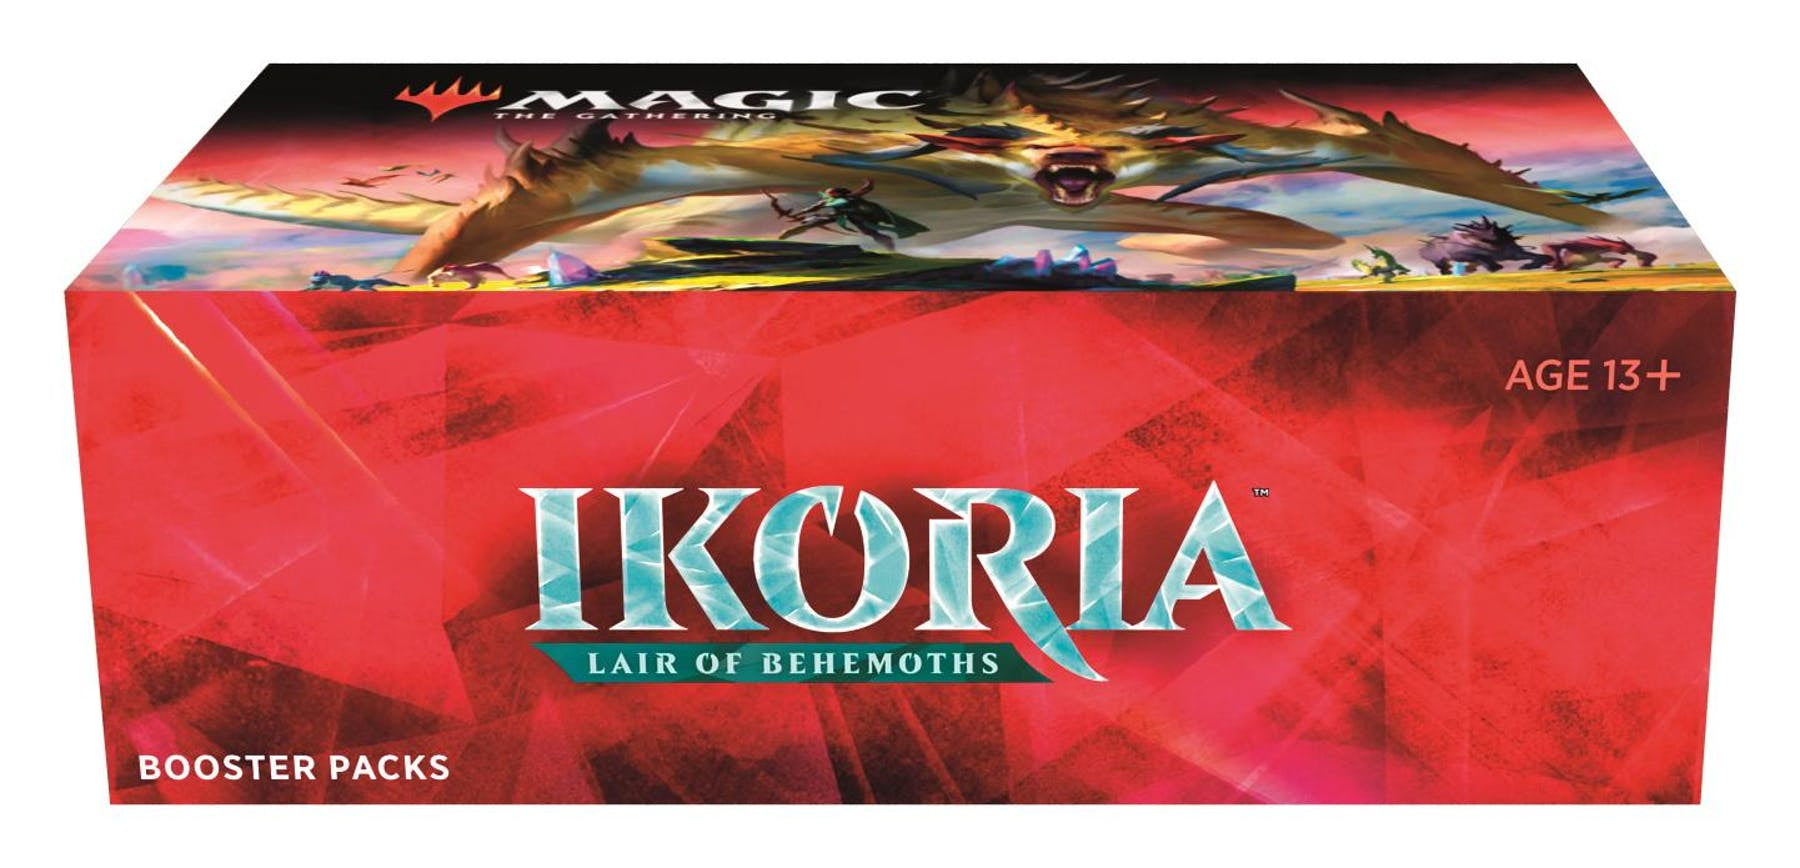 Magic The Gathering Ikoria Lair of Behemoths  Booster Box - BigBoi Cards